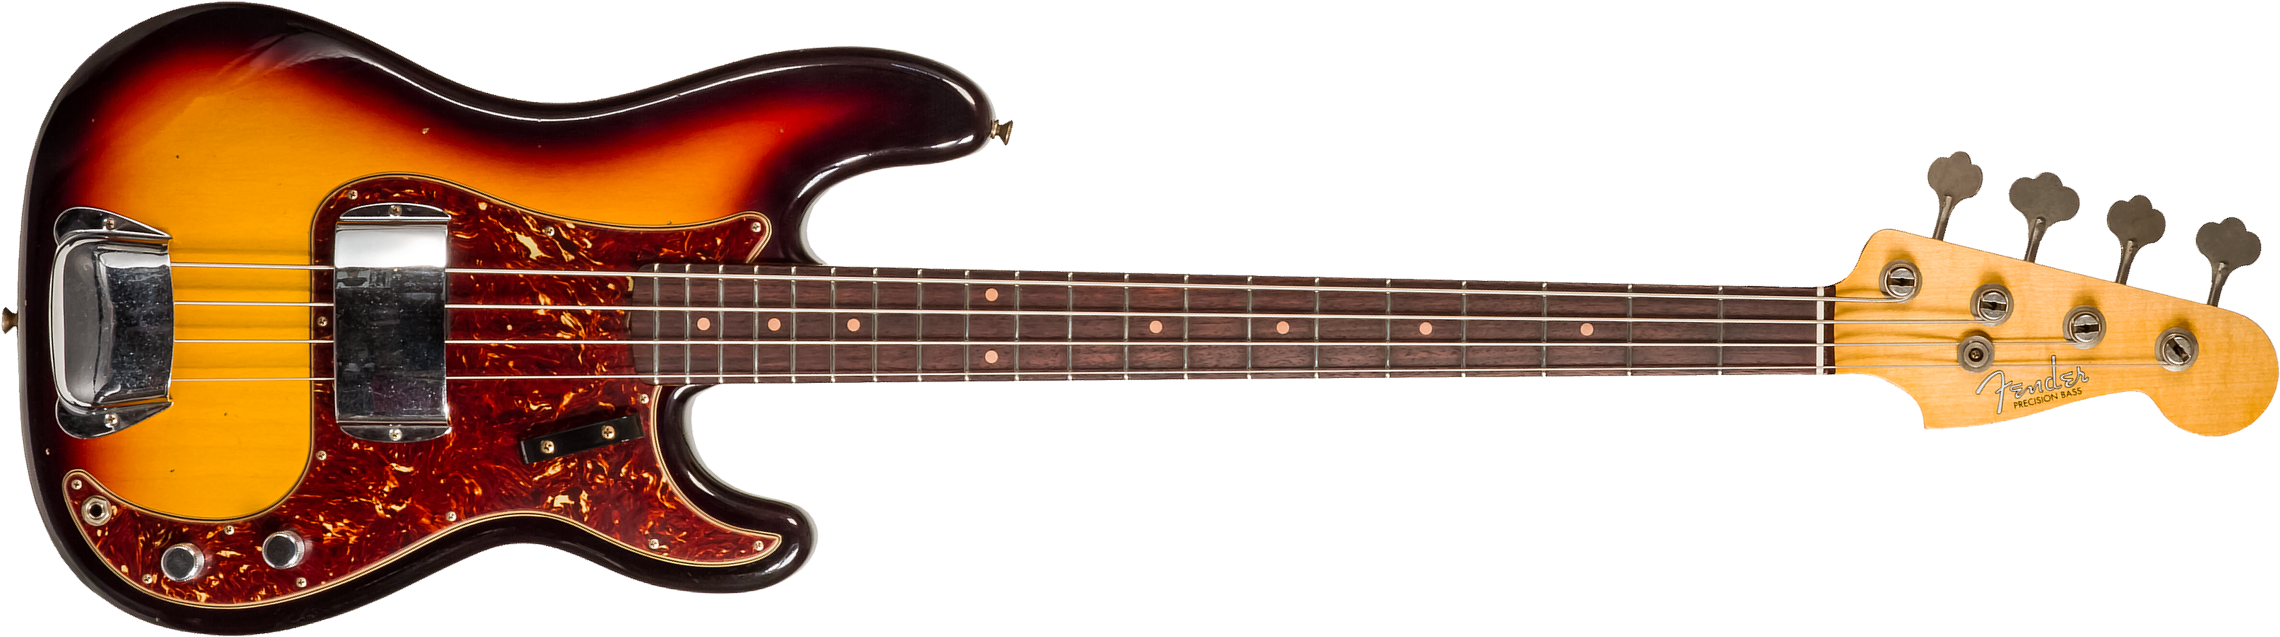 Fender Custom Shop Precision Bass 1963 Rw #cz56919 - Journeyman Relic 3-color Sunburst - Solid body elektrische bas - Main picture